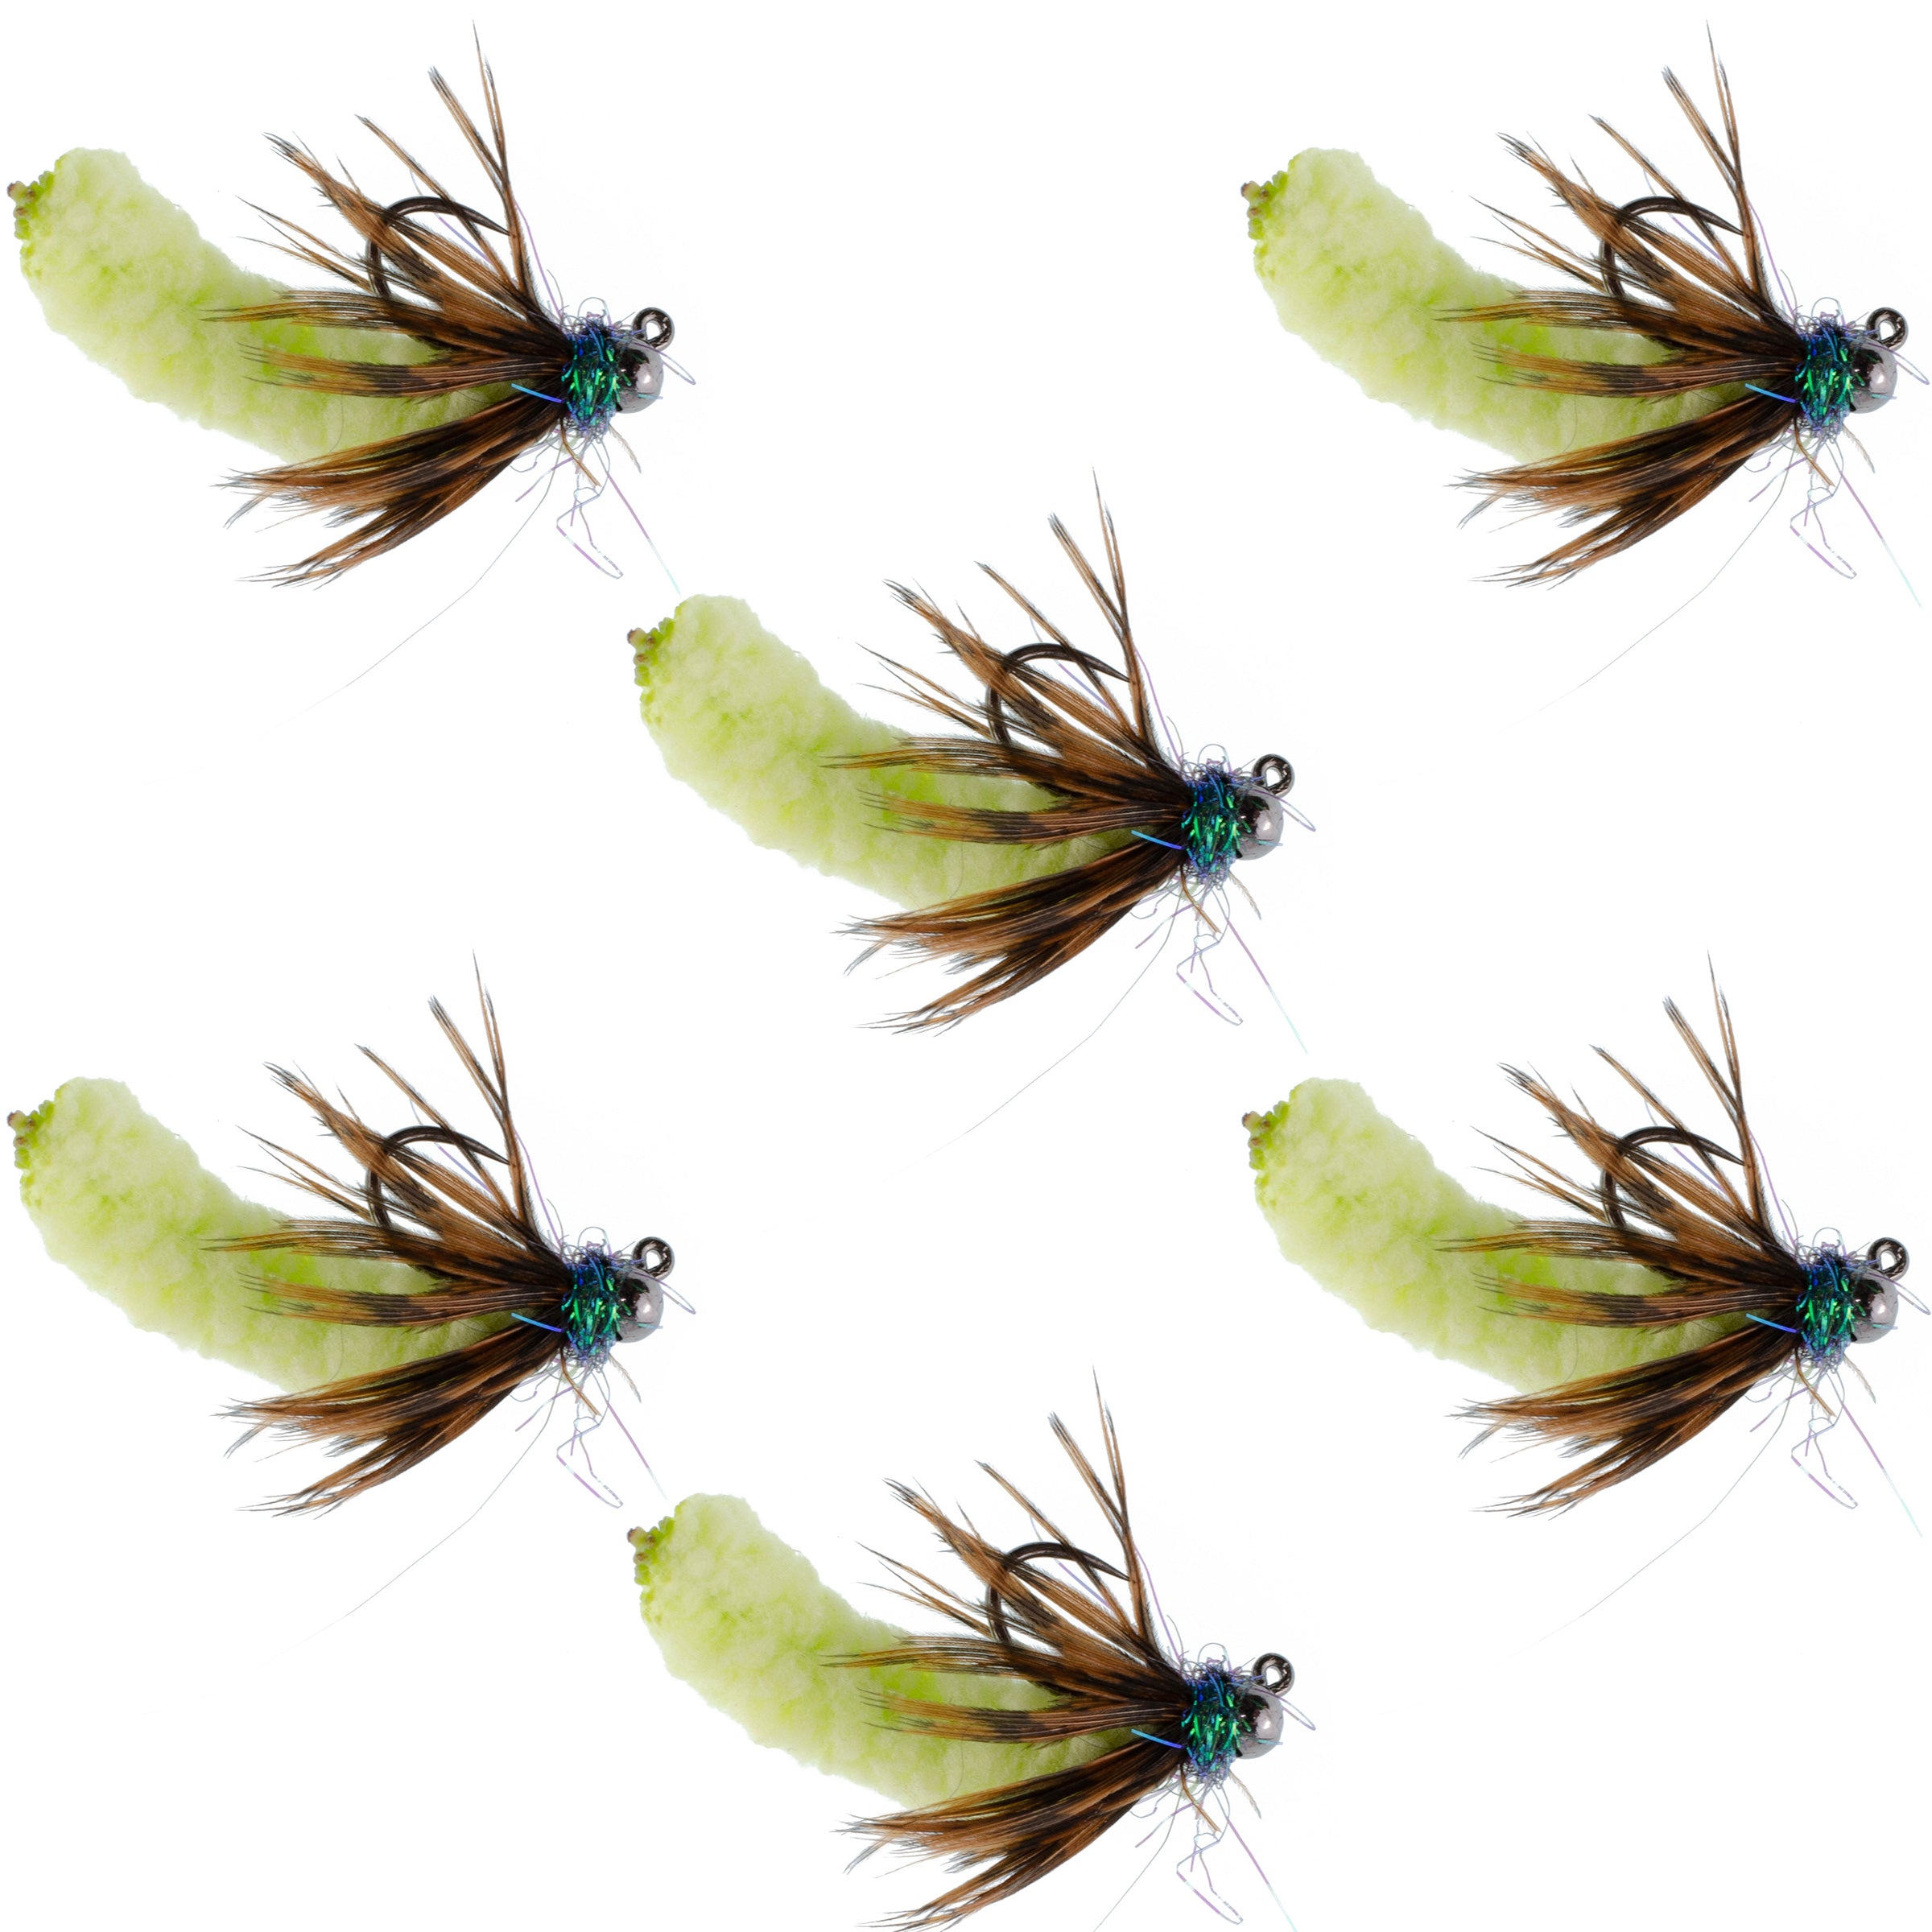 Mosca táctica con cuentas de tungsteno Chartreuse Mop Fly, mosca checa Euro Nymph sin púas, 6 moscas, tamaño 14